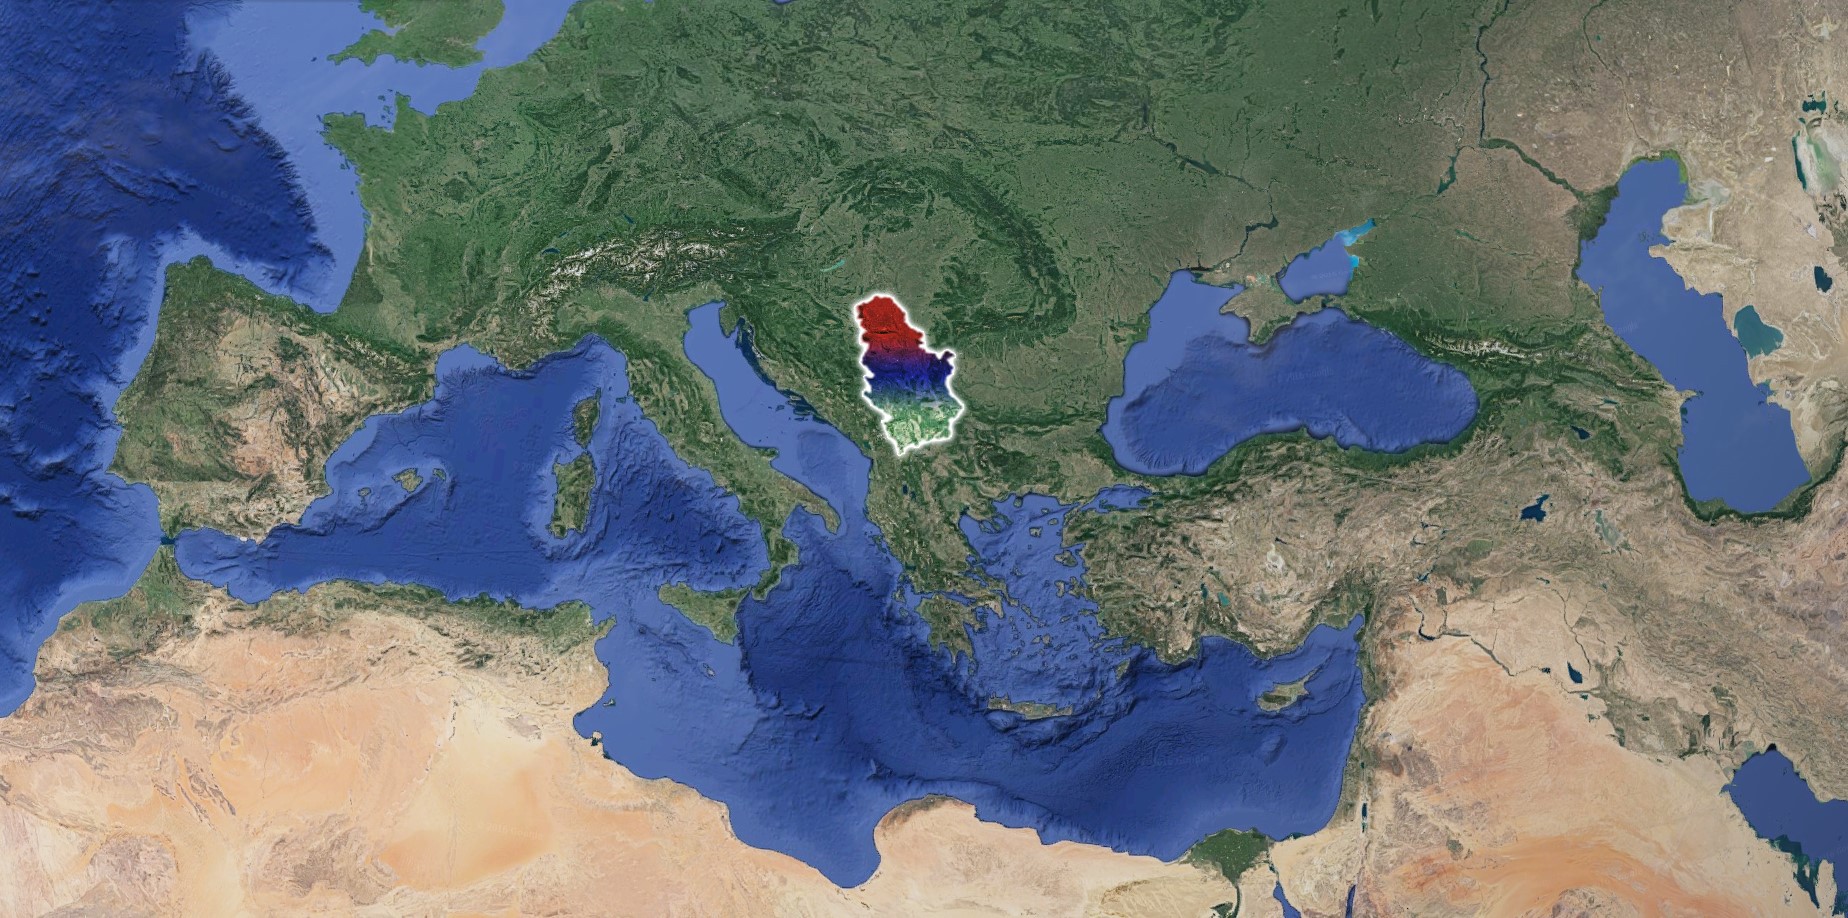 General 1848x918 Serbia satellite imagery satellite cartography map digital art